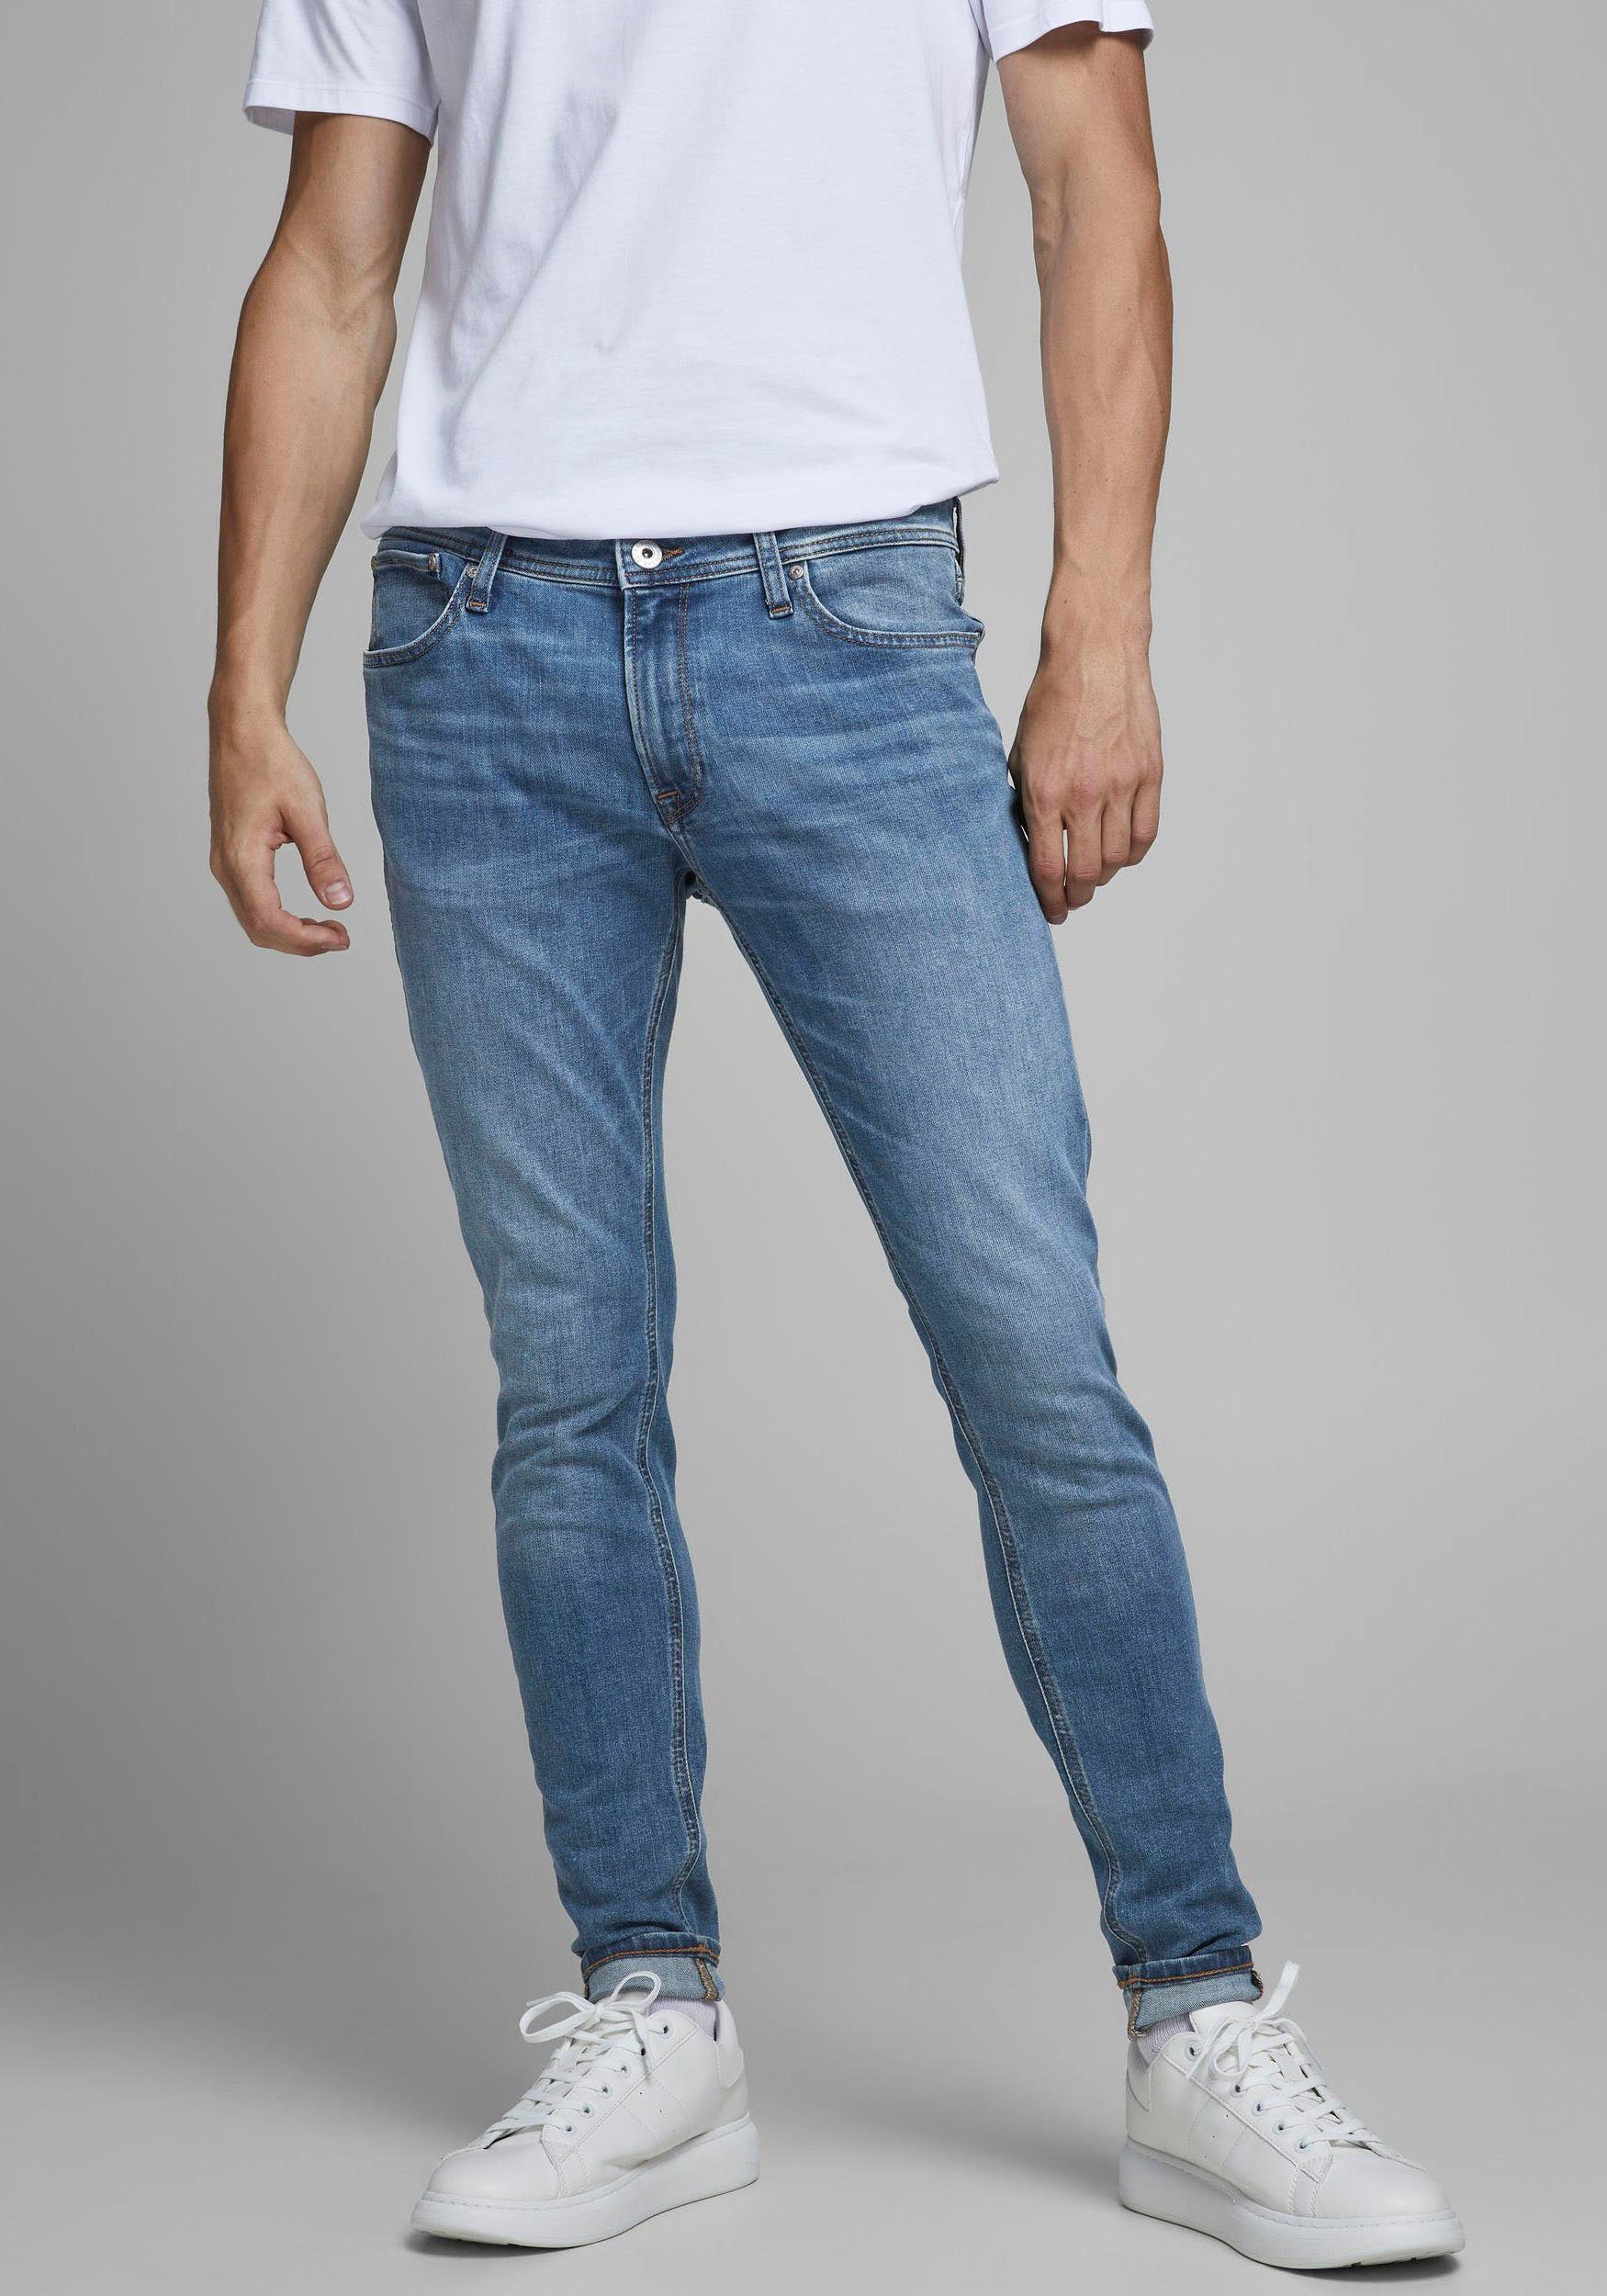 Herren-Skinny-Jeans online kaufen | OTTO